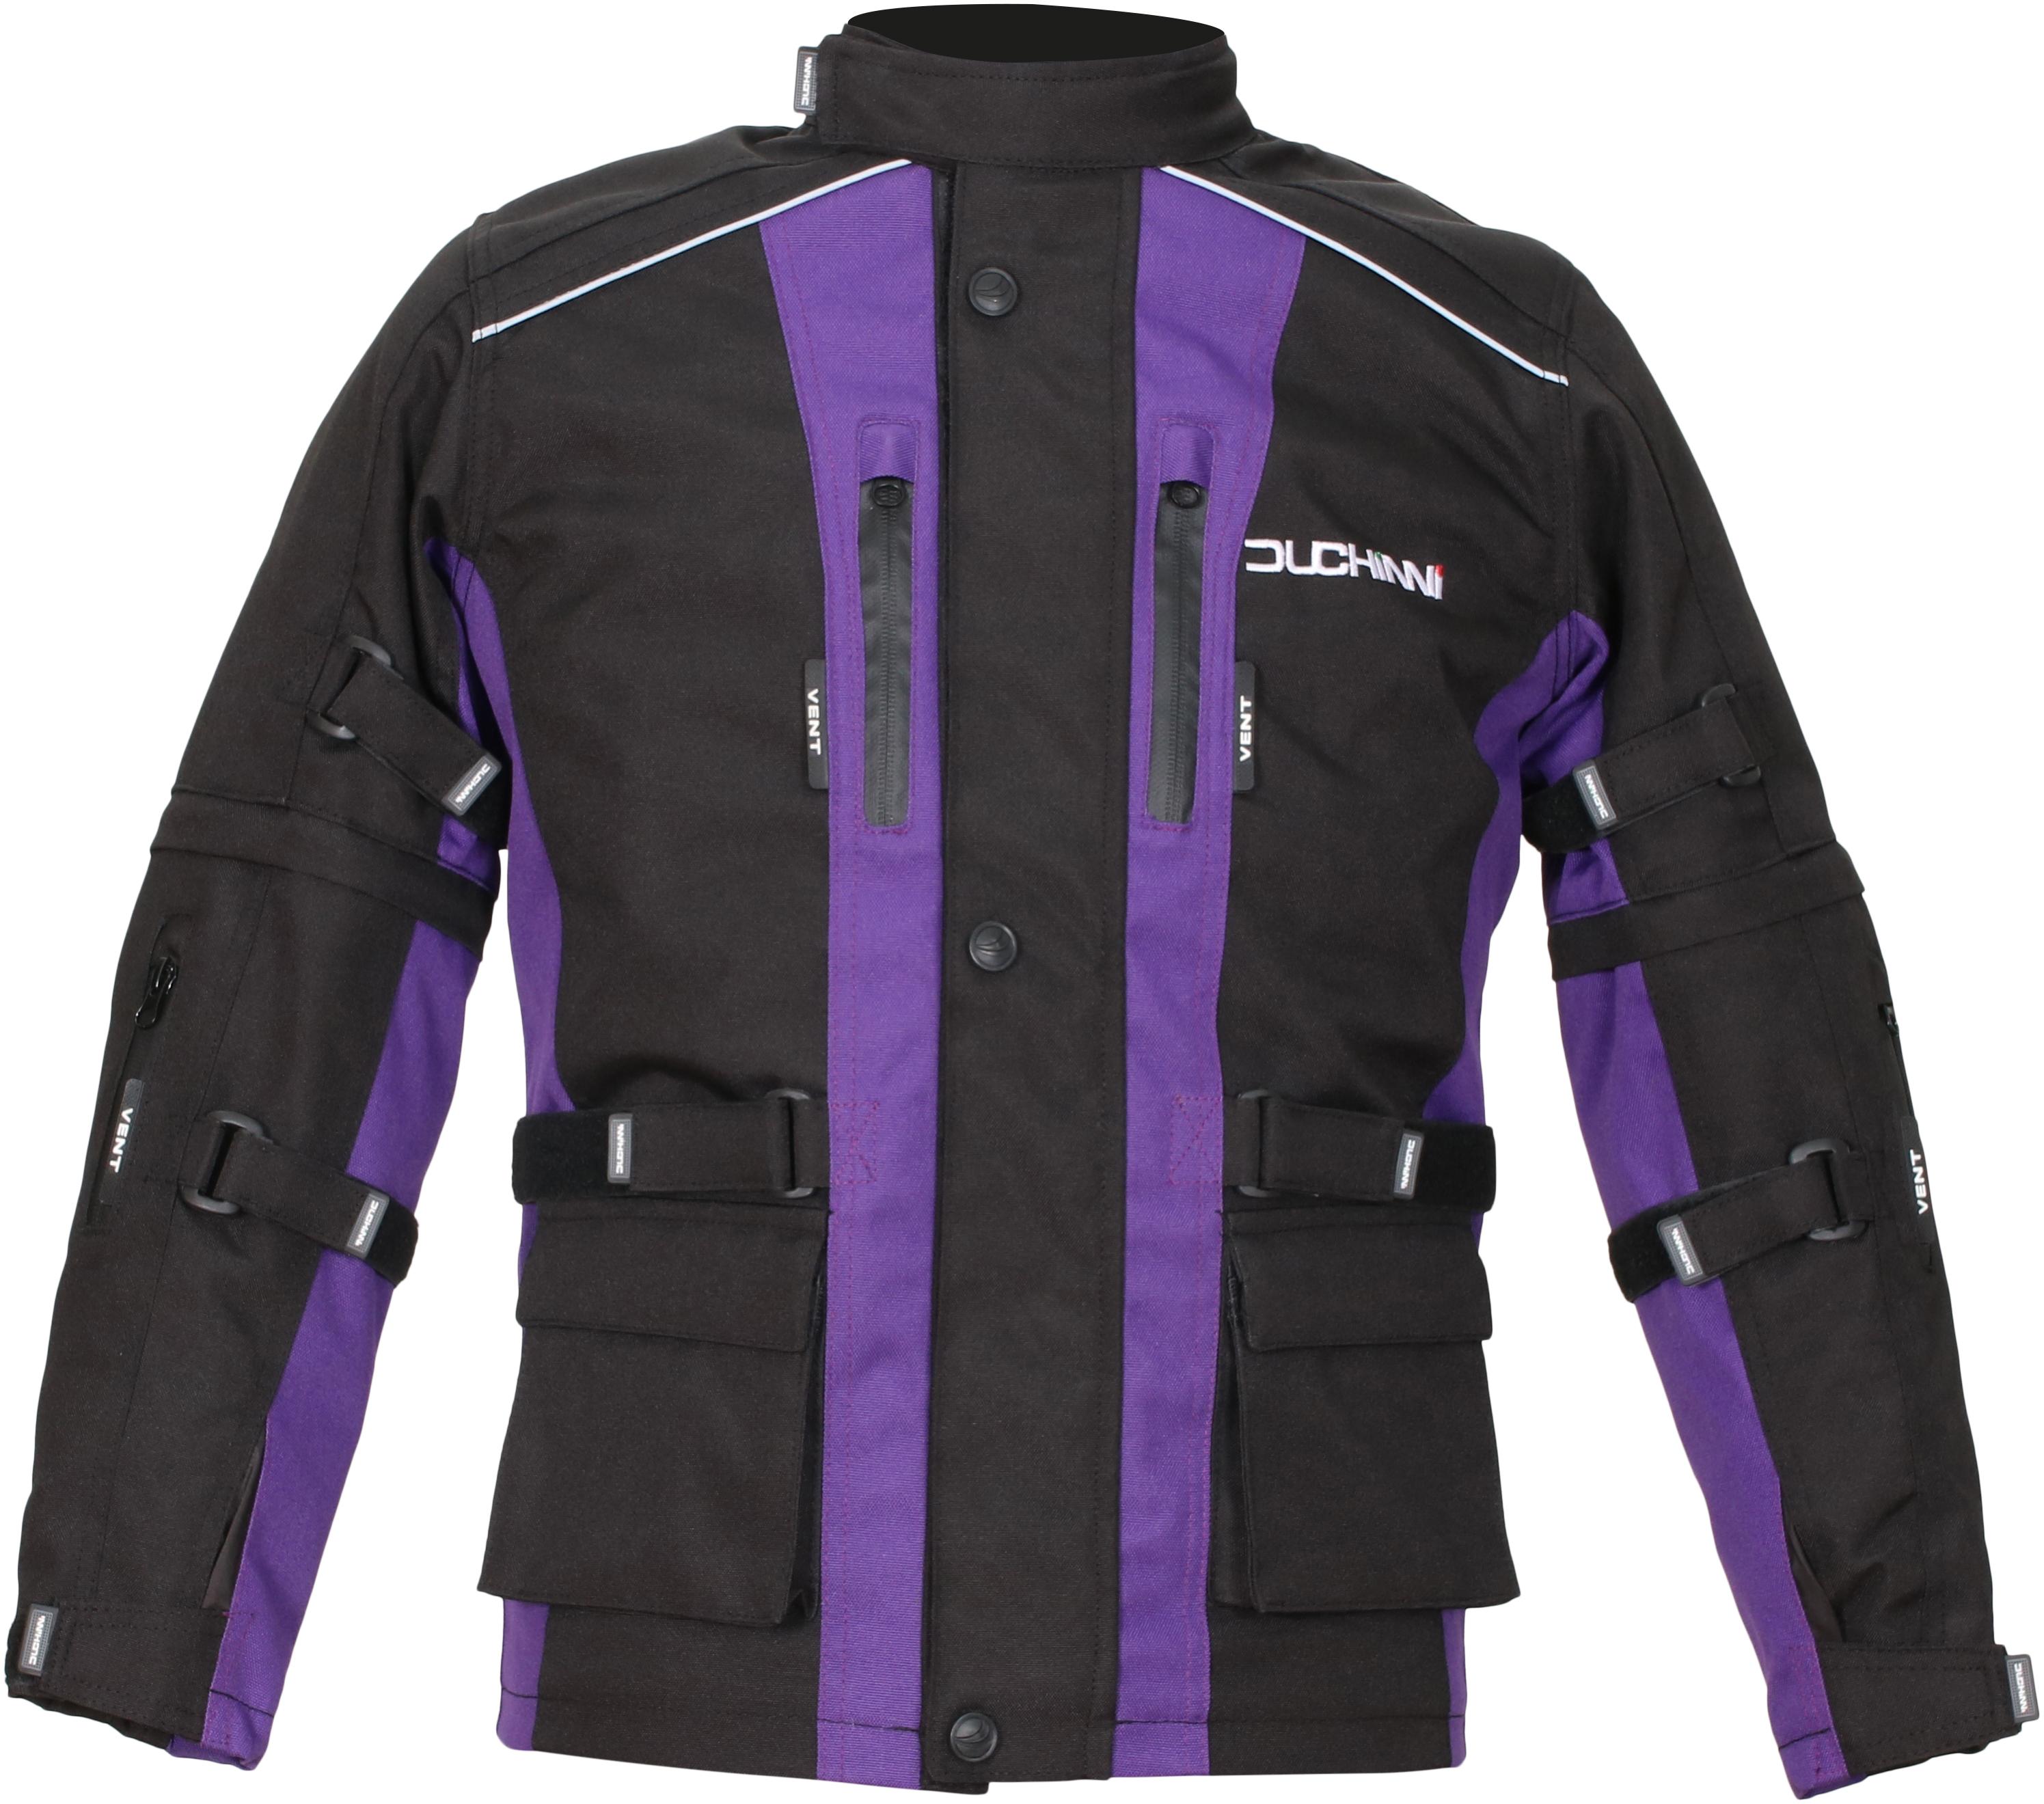 Duchinni Jago Youth Motorcycle Jacket - Black And Purple, Xs